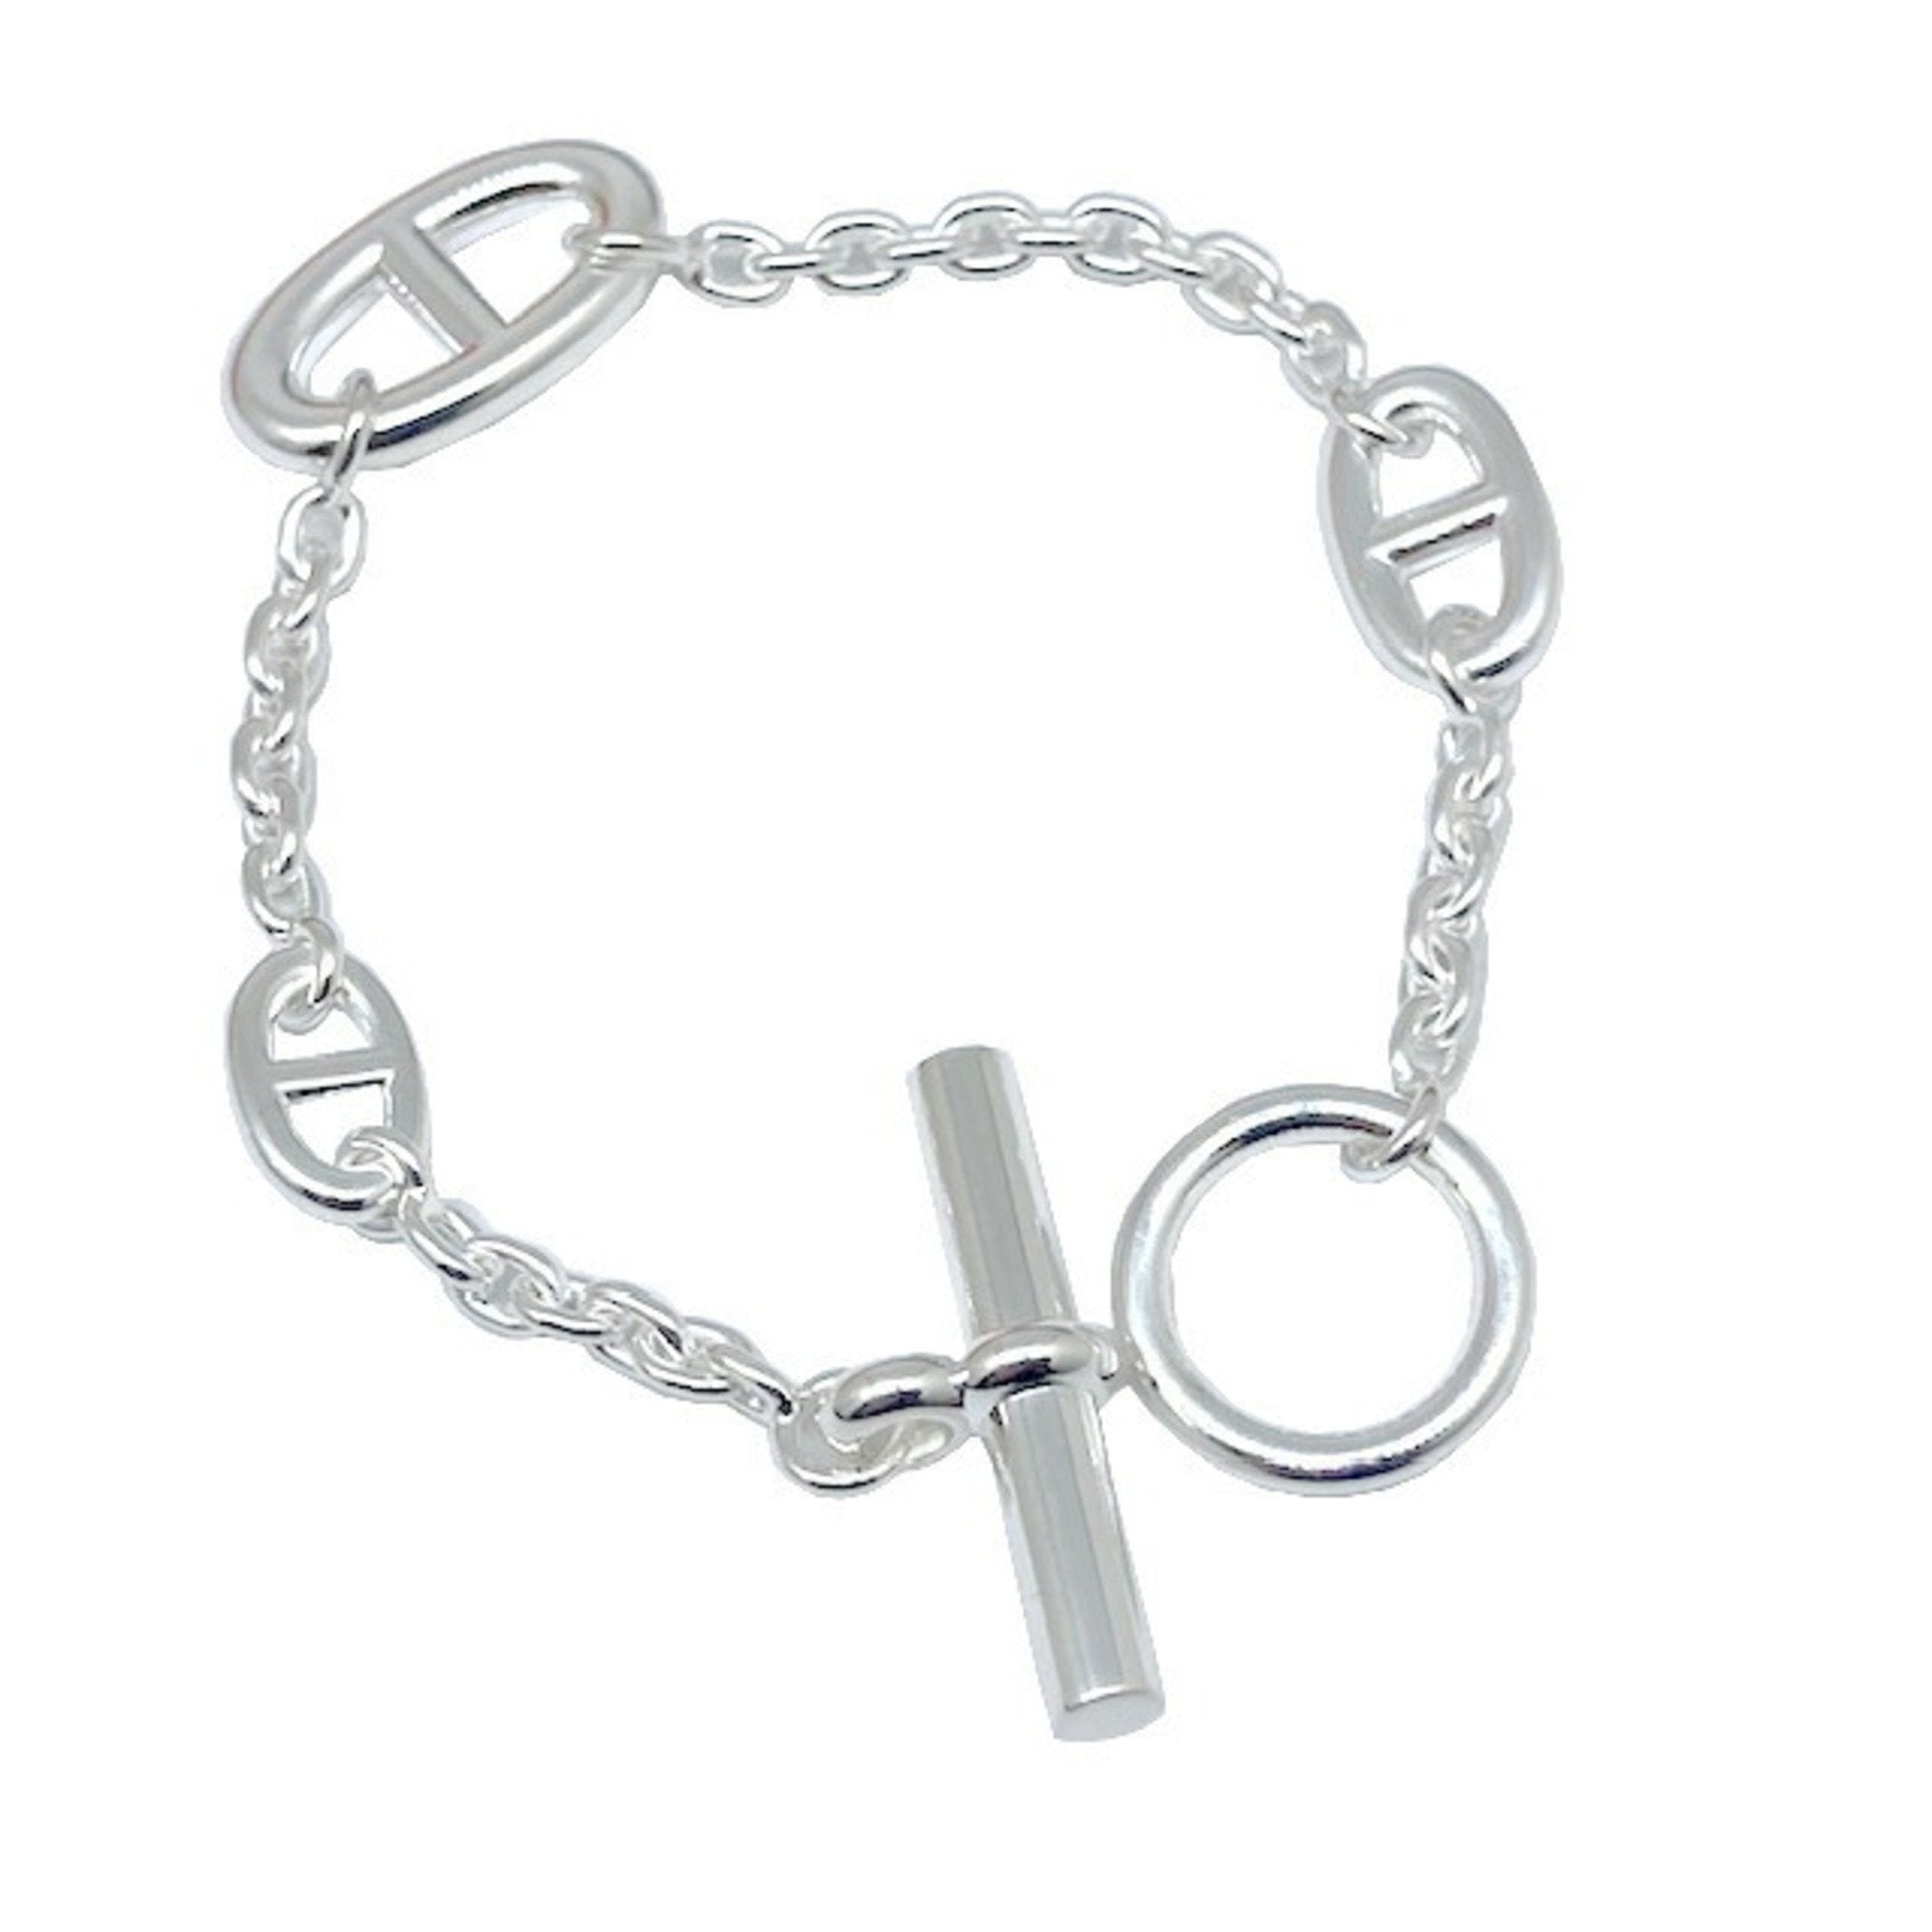 image of HERMES Farandole Bracelet SV925 Ag925 Chaine Dunkle Silver Fashion Accessory Men Women Unisex